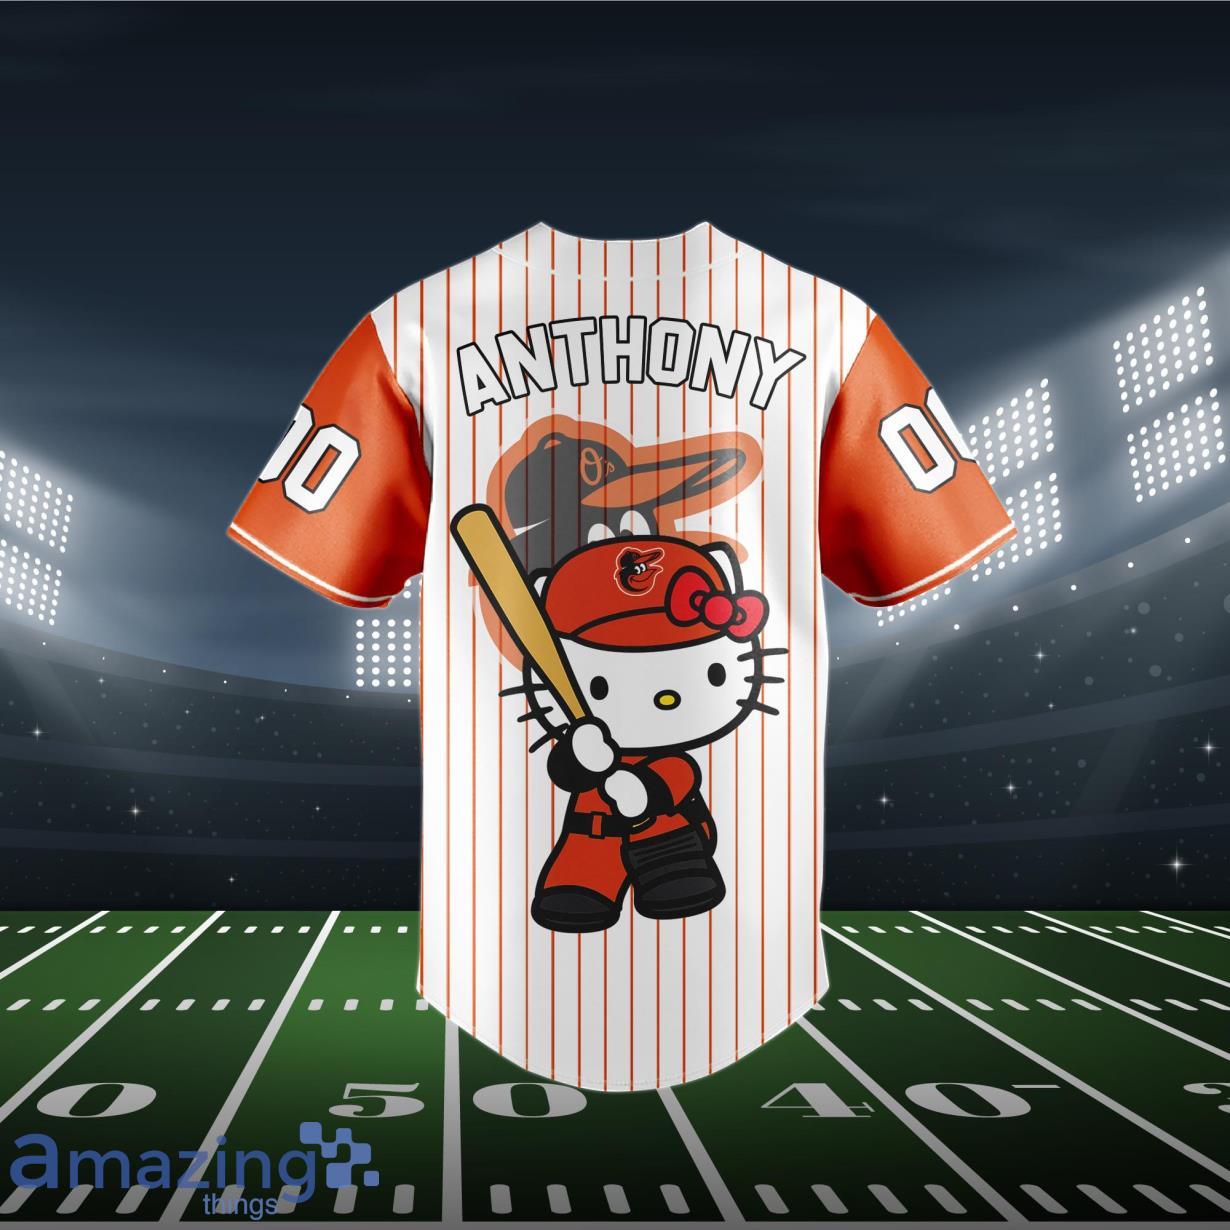 Baltimore Orioles Baseball Jersey MLB Hello Kitty Custom Name & Number